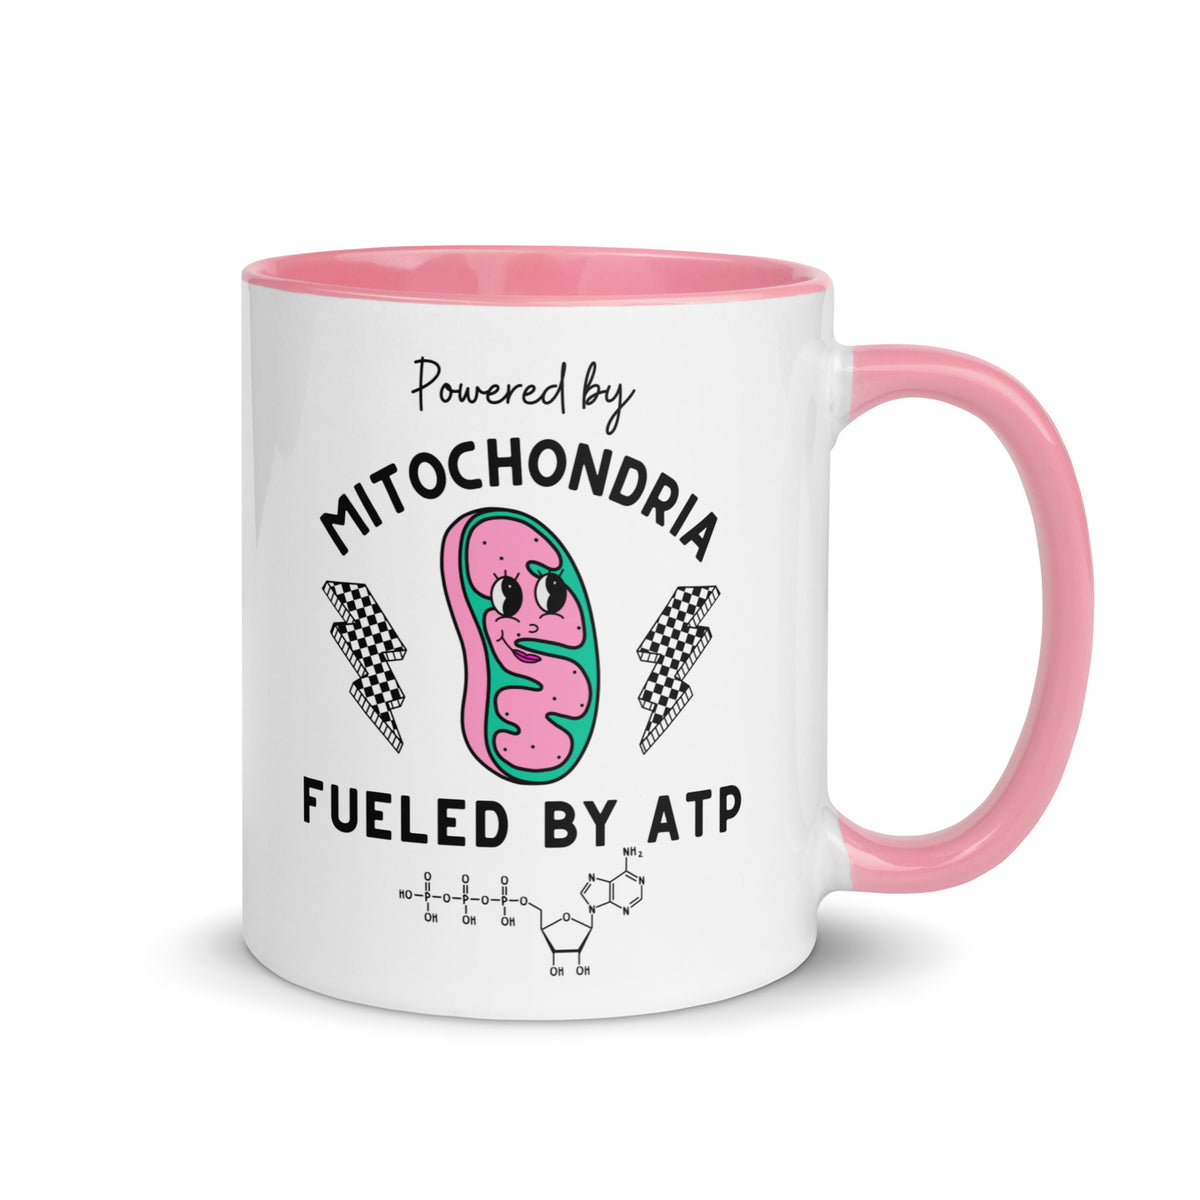 Powered by Mitochondria Mug